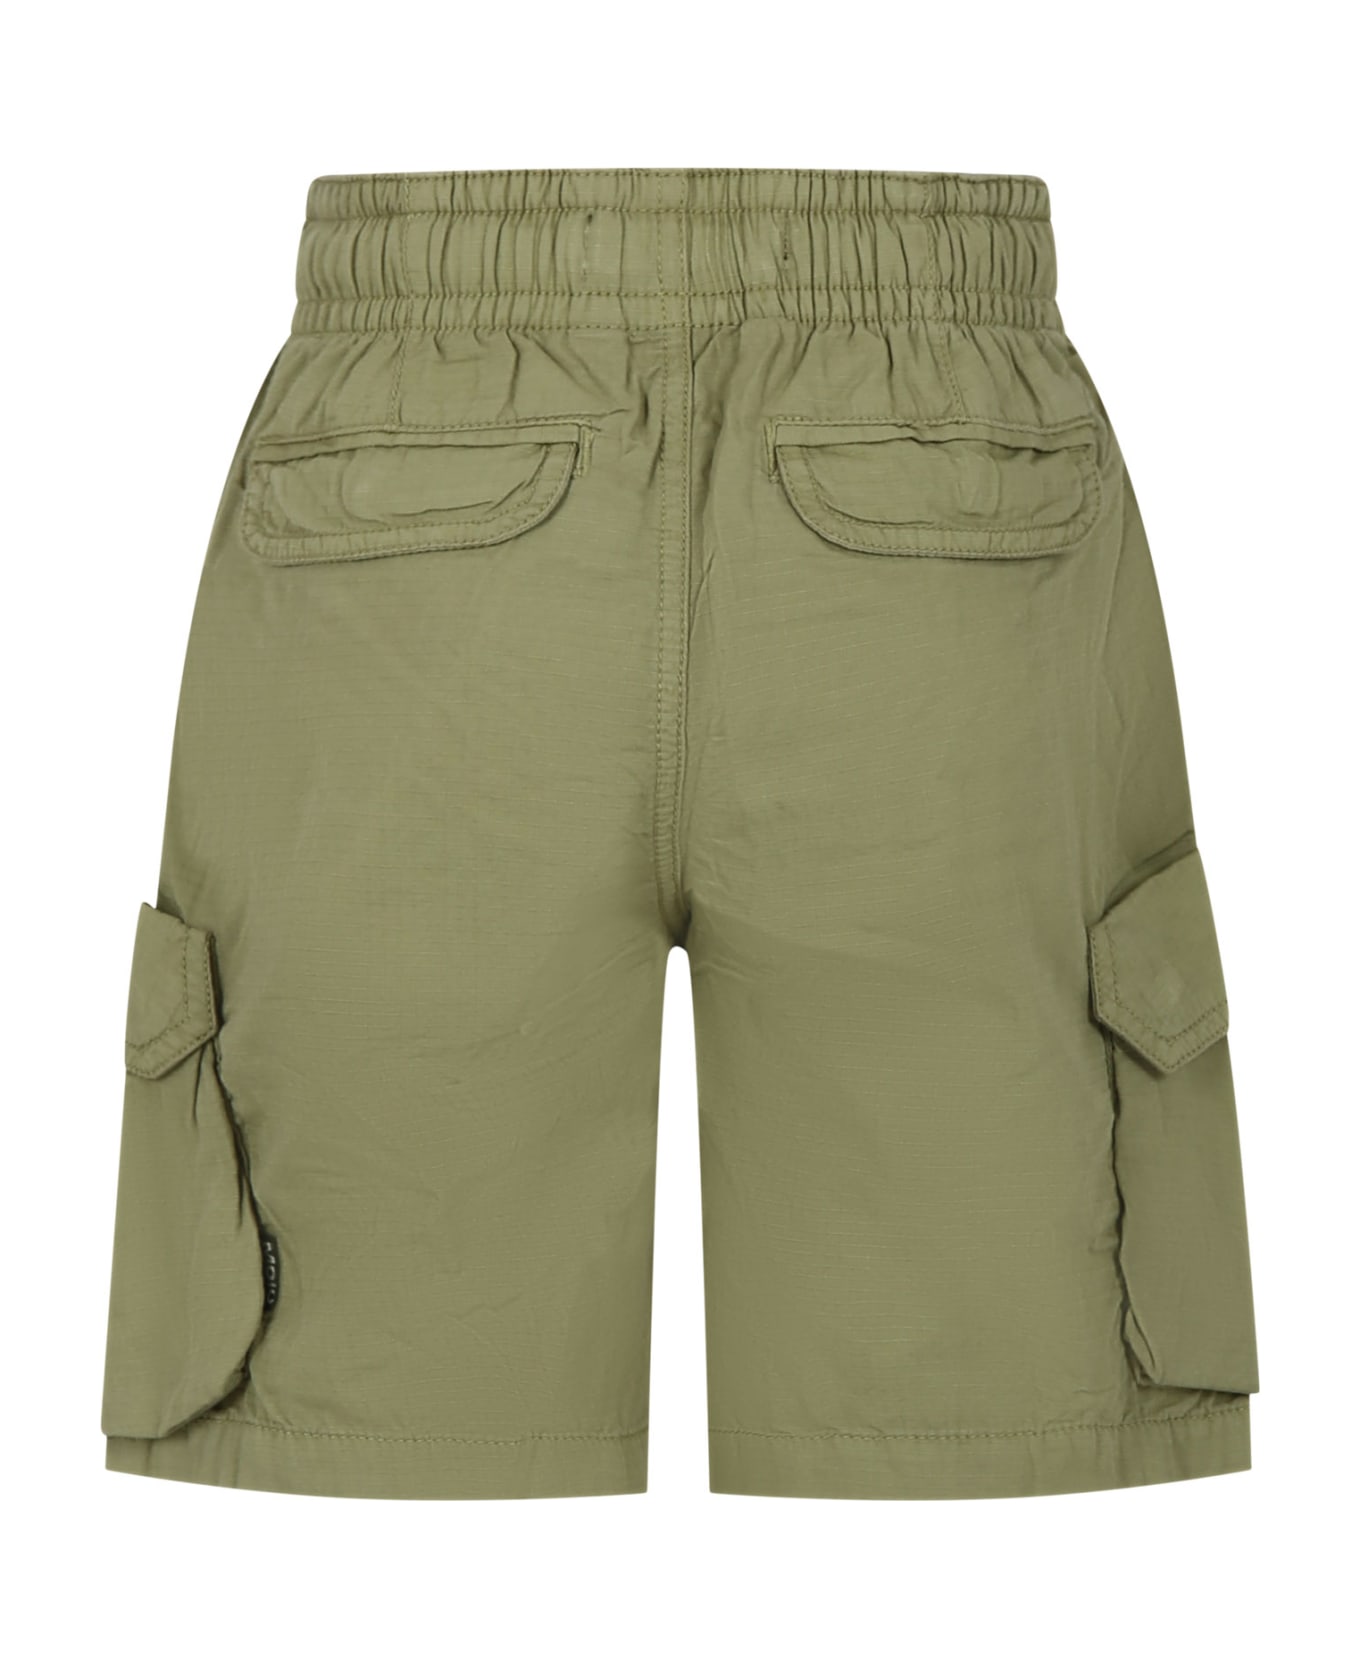 Molo Casual Argod Green Shorts For Boy - Green ボトムス